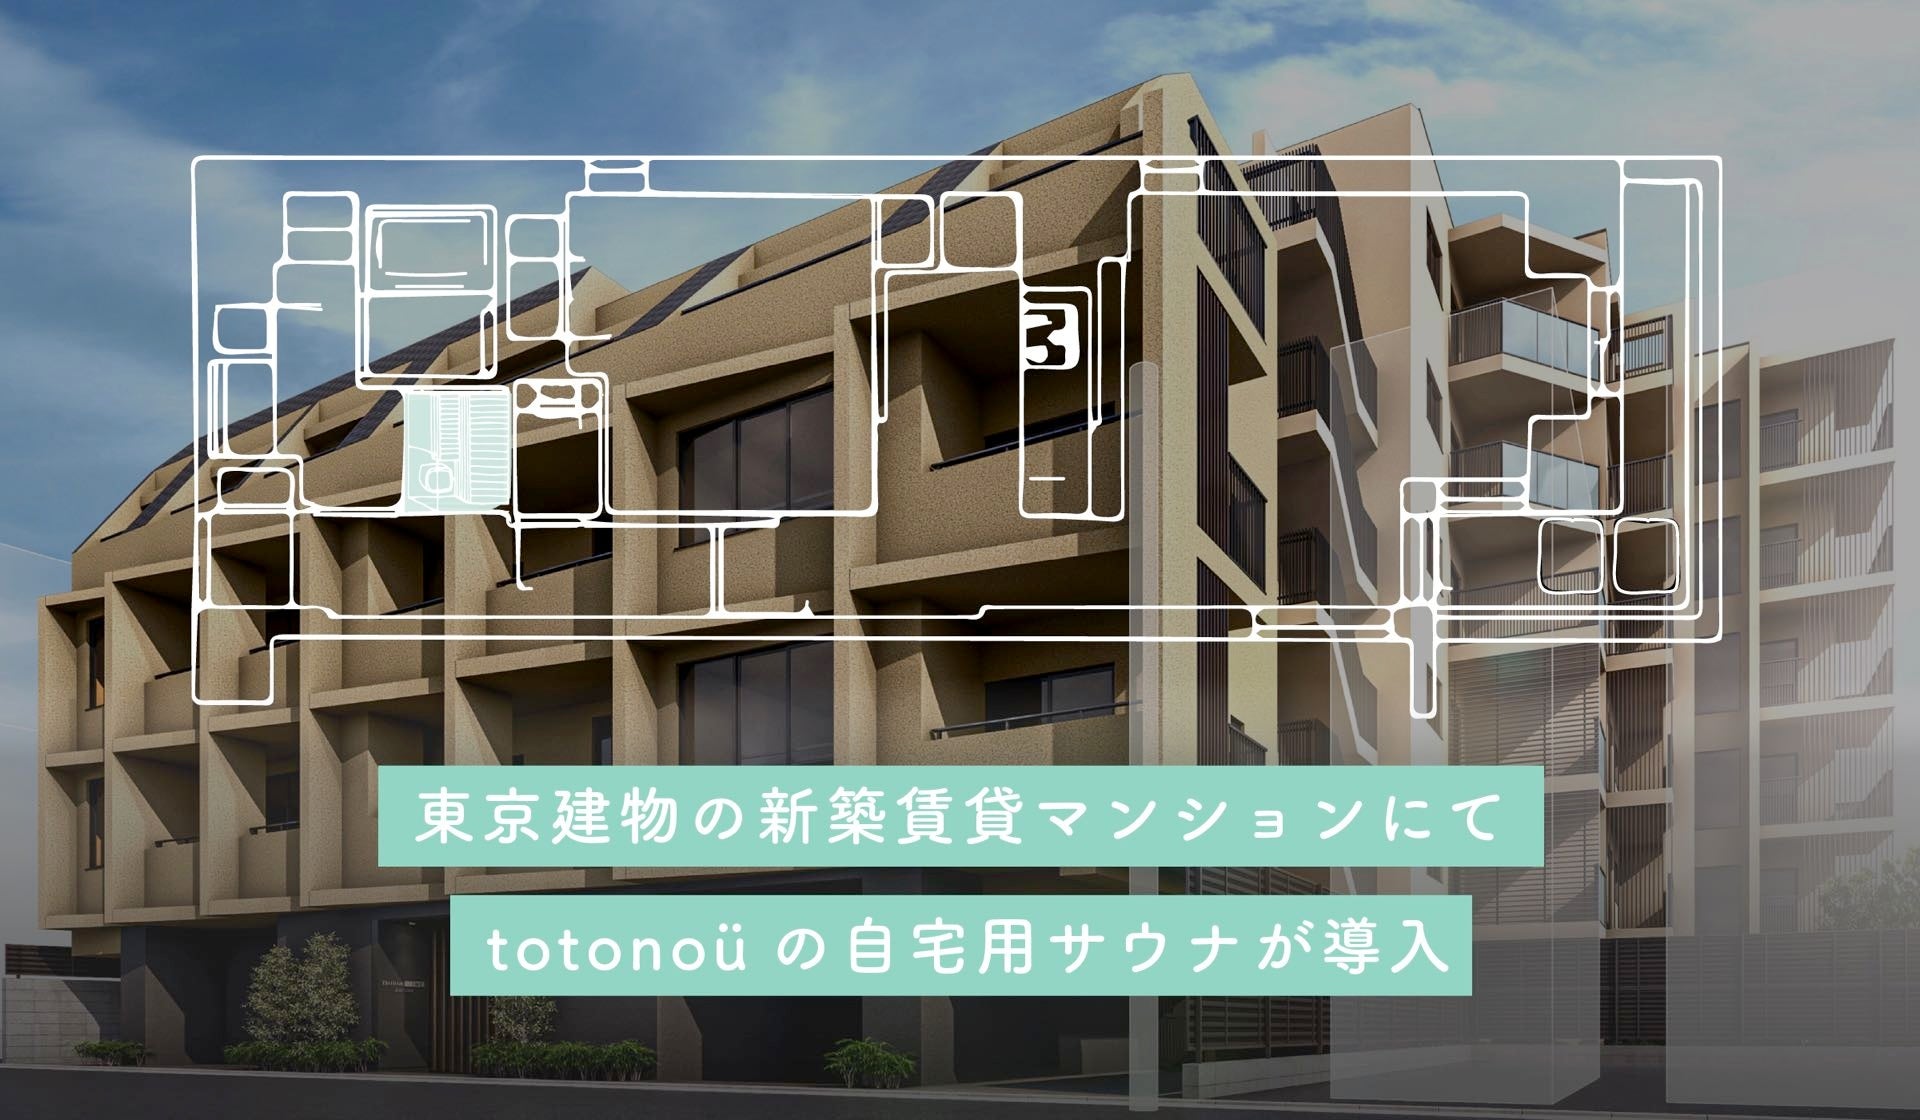 【totonoü】東京建物の新築賃貸マンション『Brillia ist 文京六義園』にて、北欧産・自宅用サウナが導入のサブ画像1